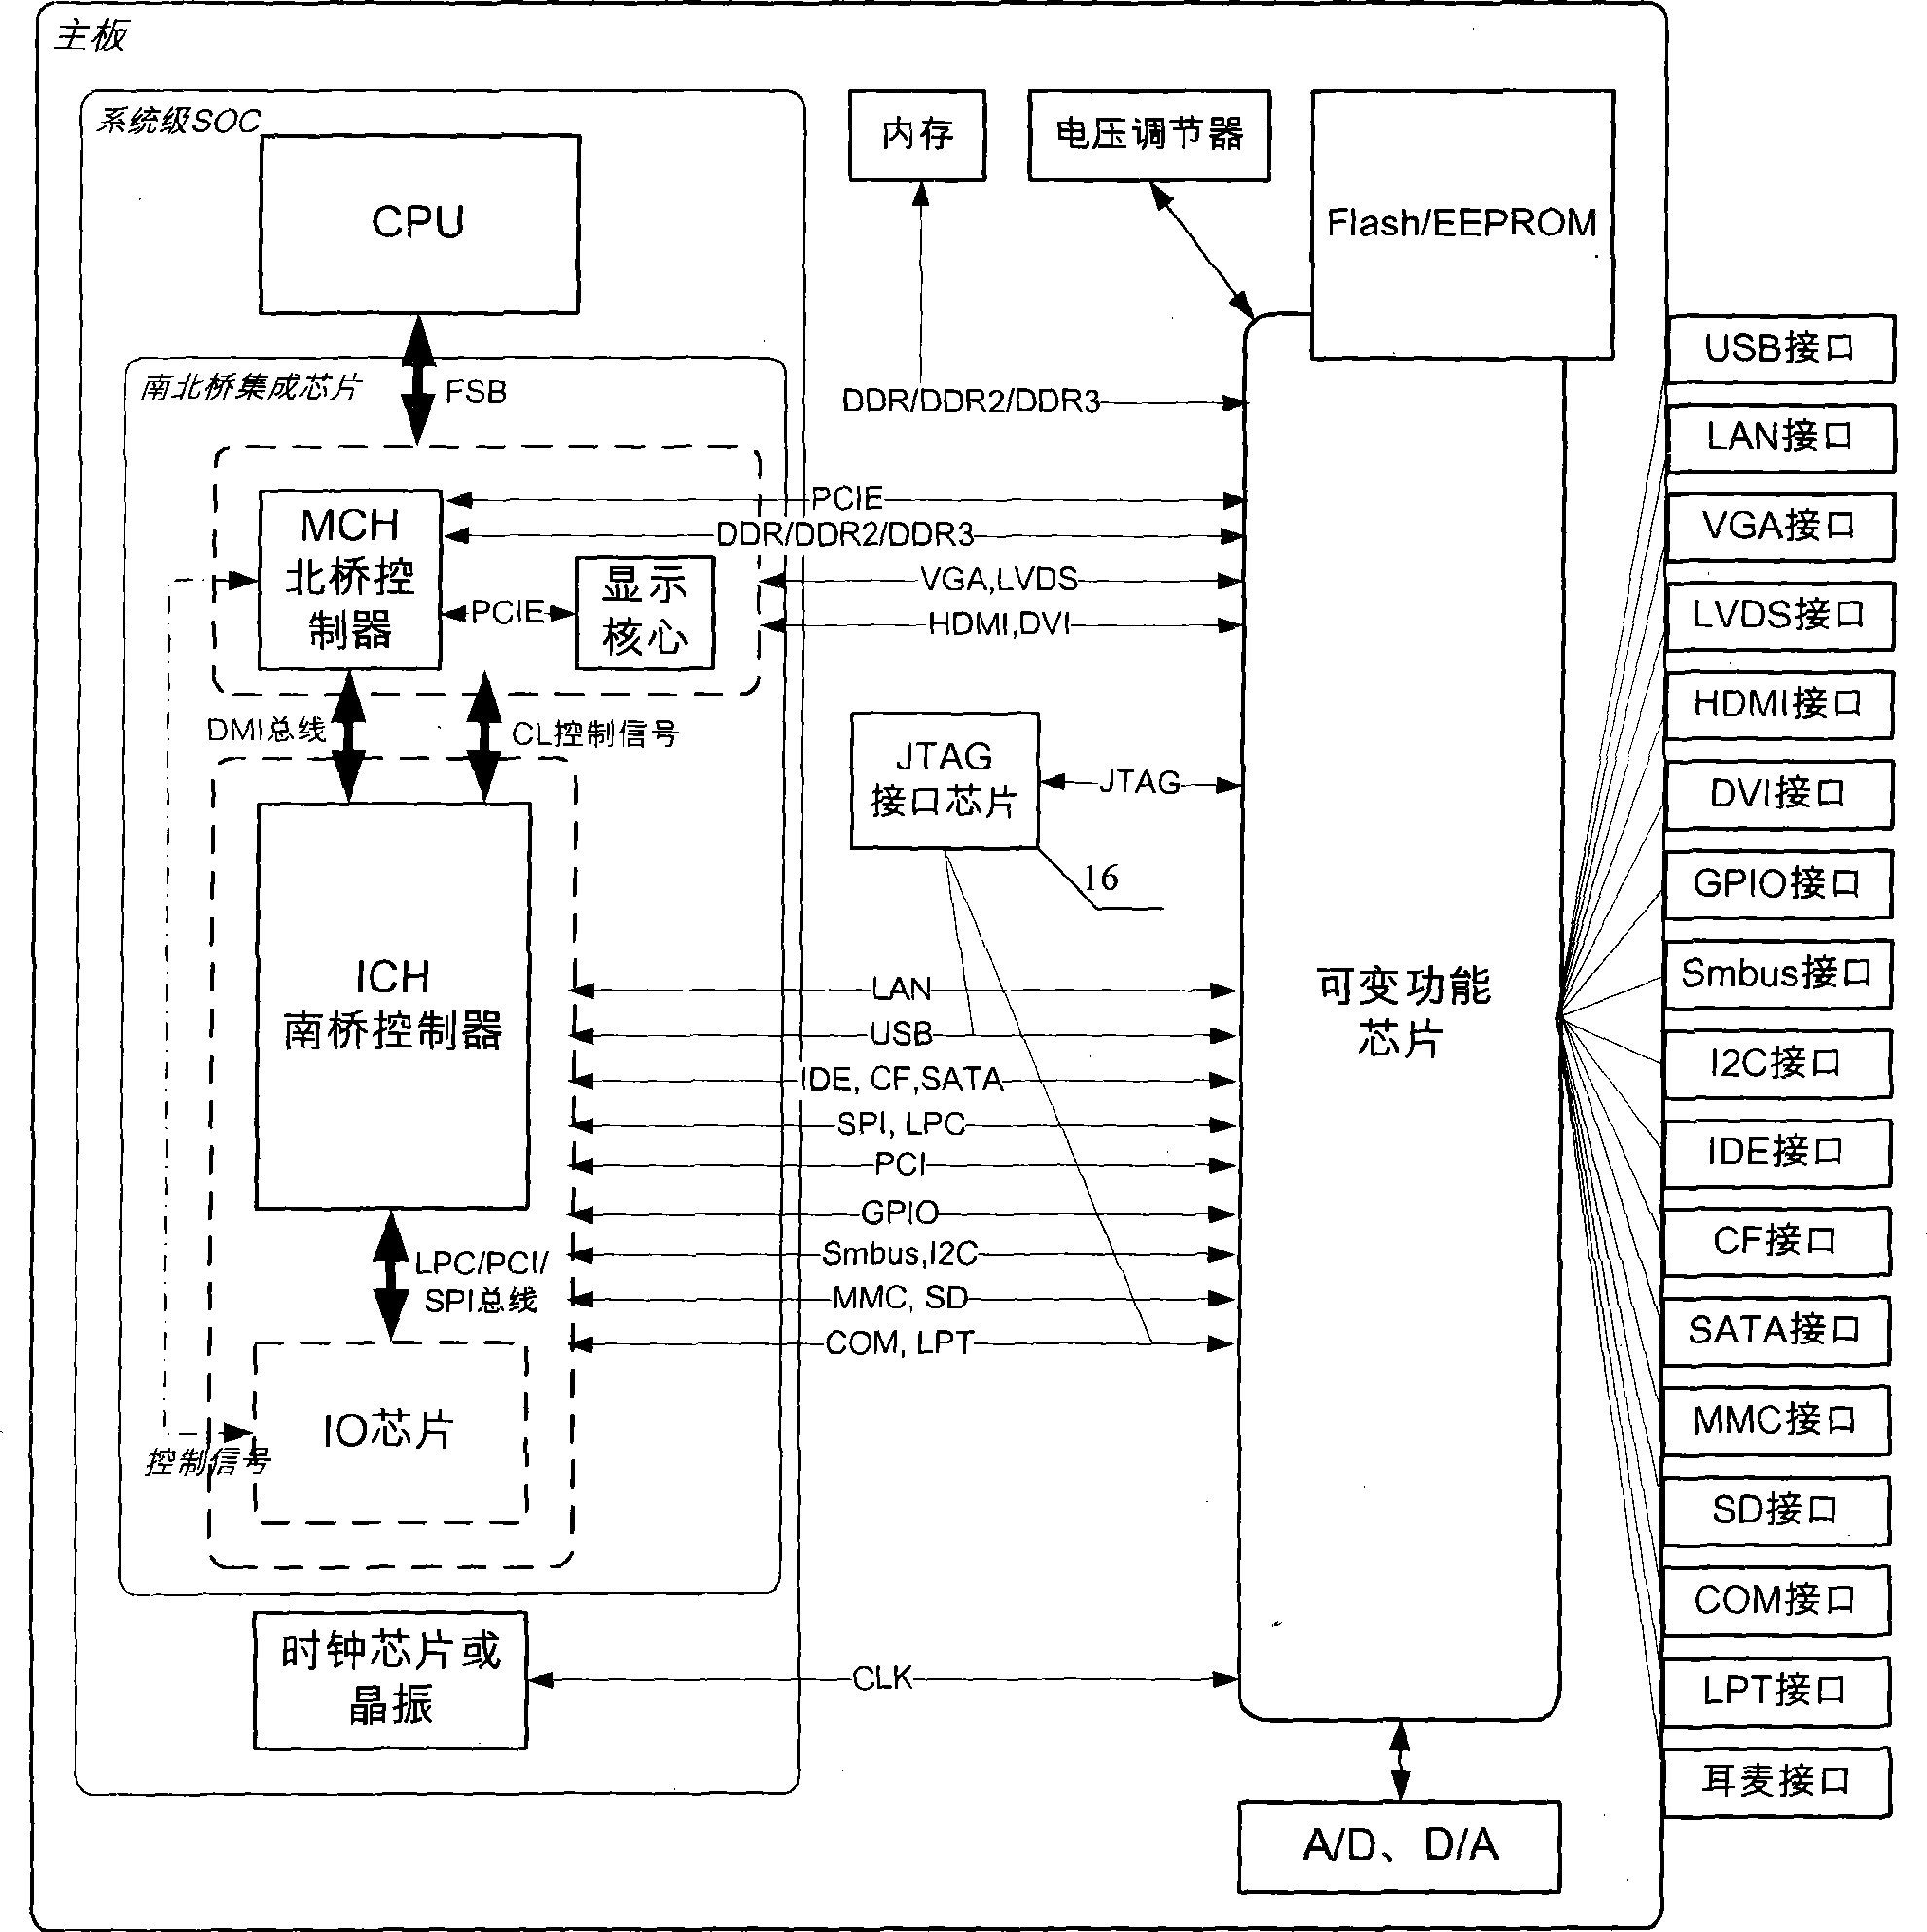 Function-variable portable computer mainboard